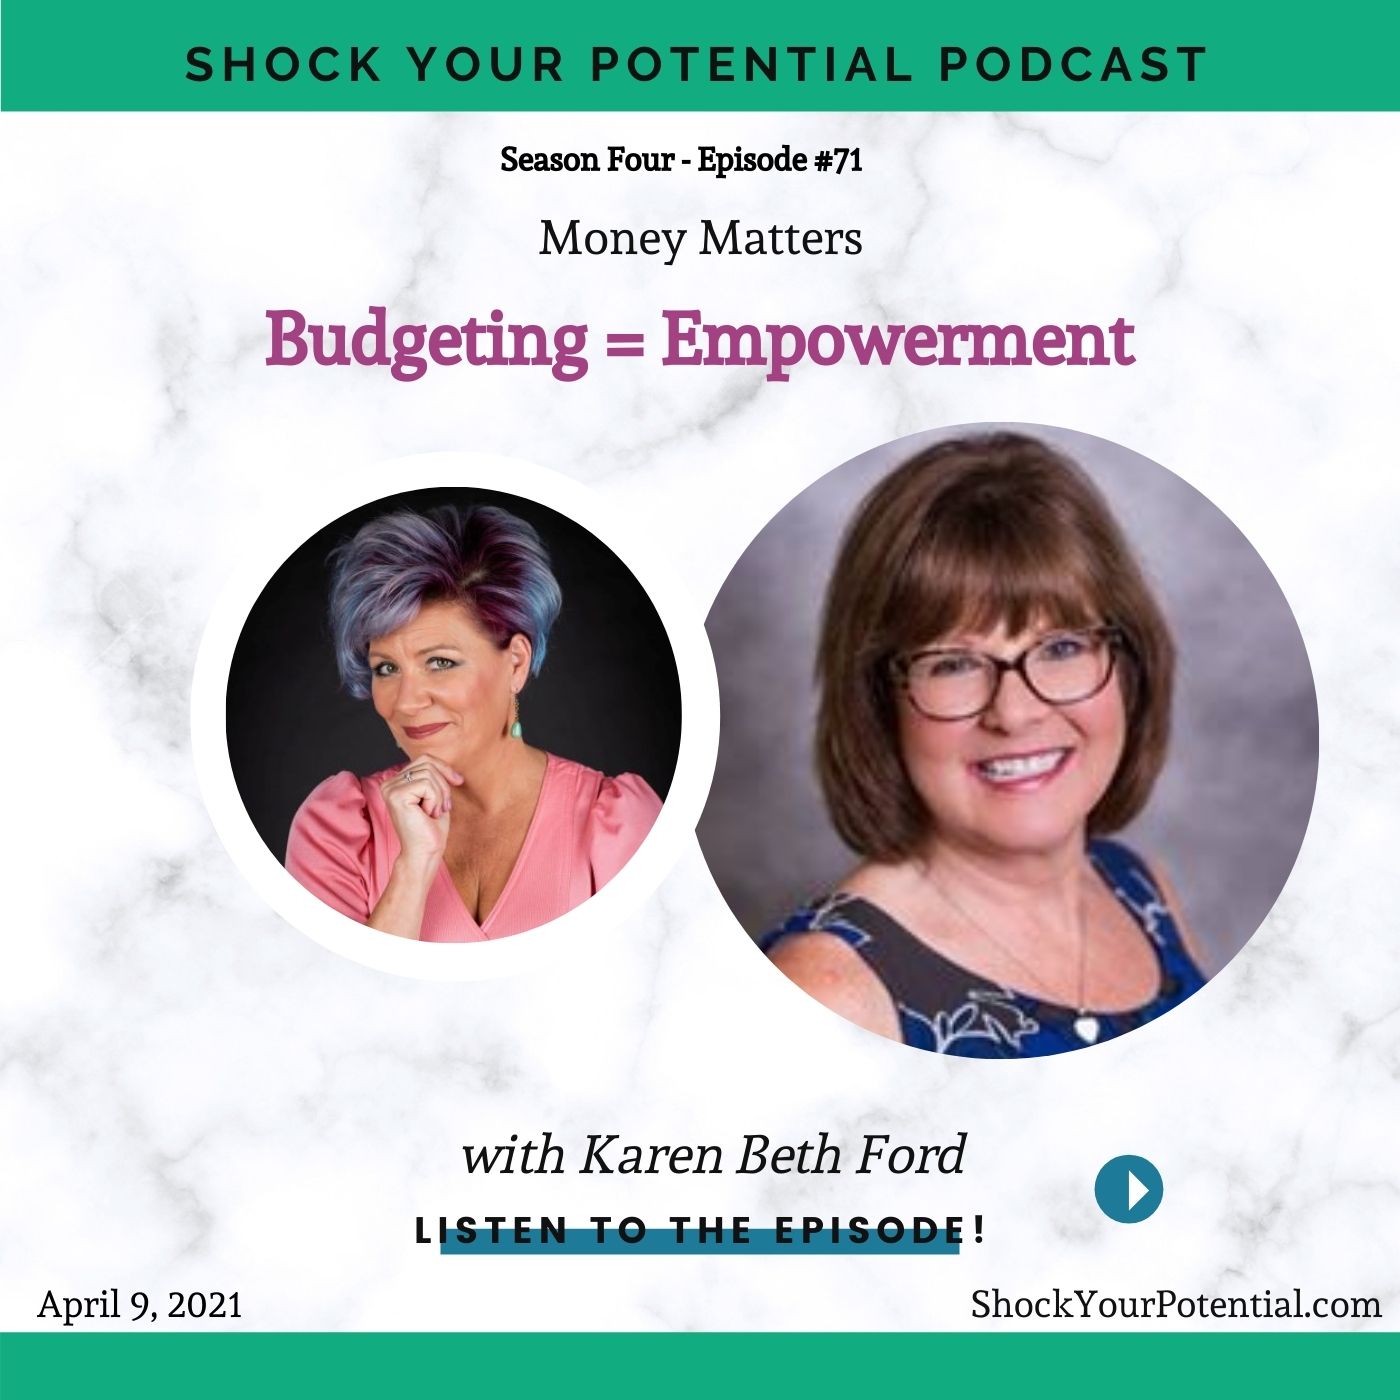 Budgeting = Empowerment – Karen Beth Ford